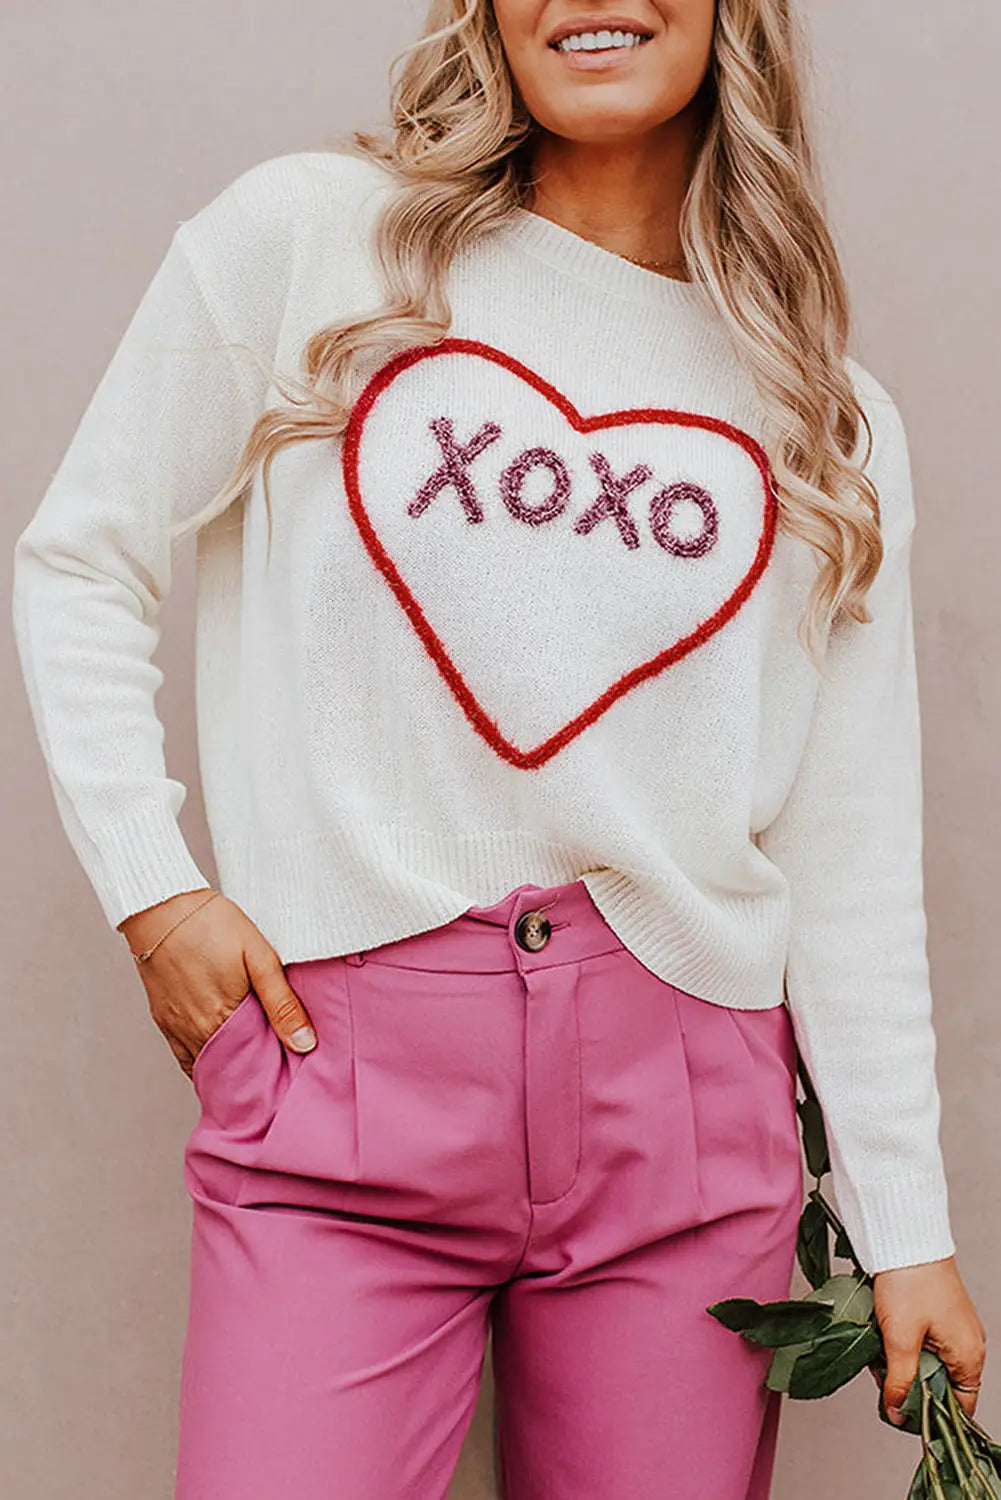 Rose heart xoxo pattern drop shoulder rib knit sweater - white / l 55% acrylic + 45% cotton sweaters & cardigans